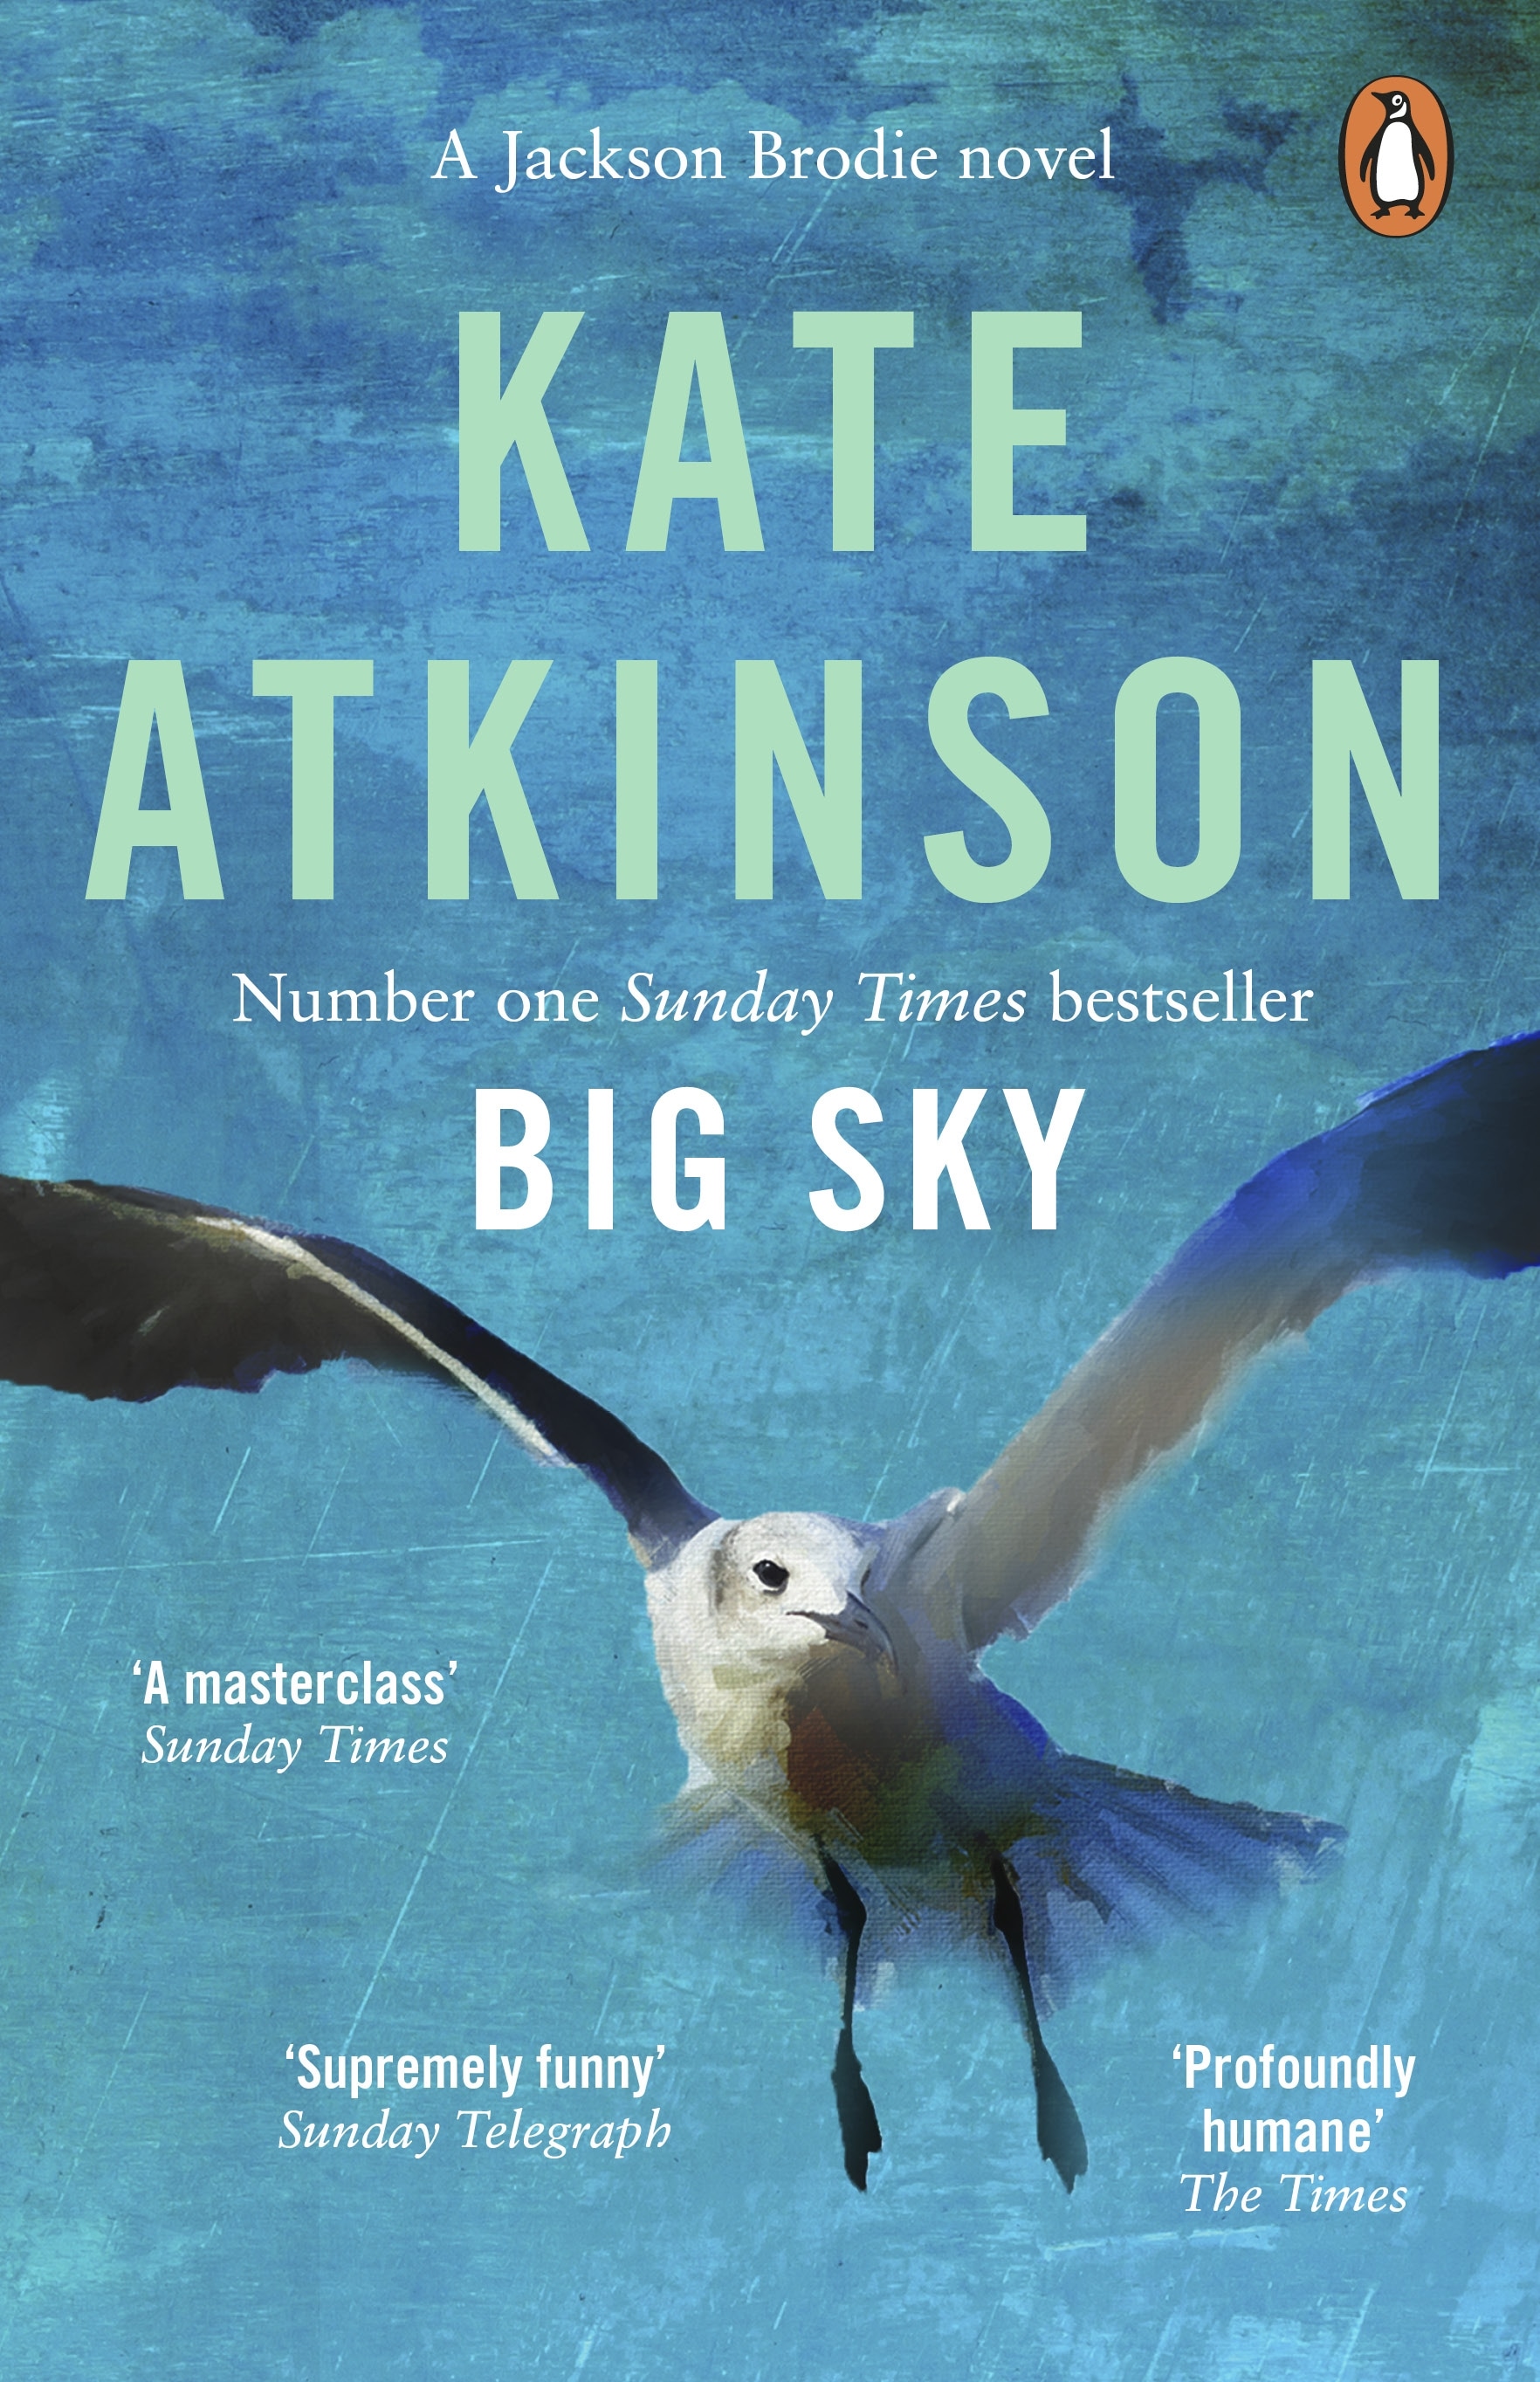 Book “Big Sky” by Kate Atkinson — January 23, 2020